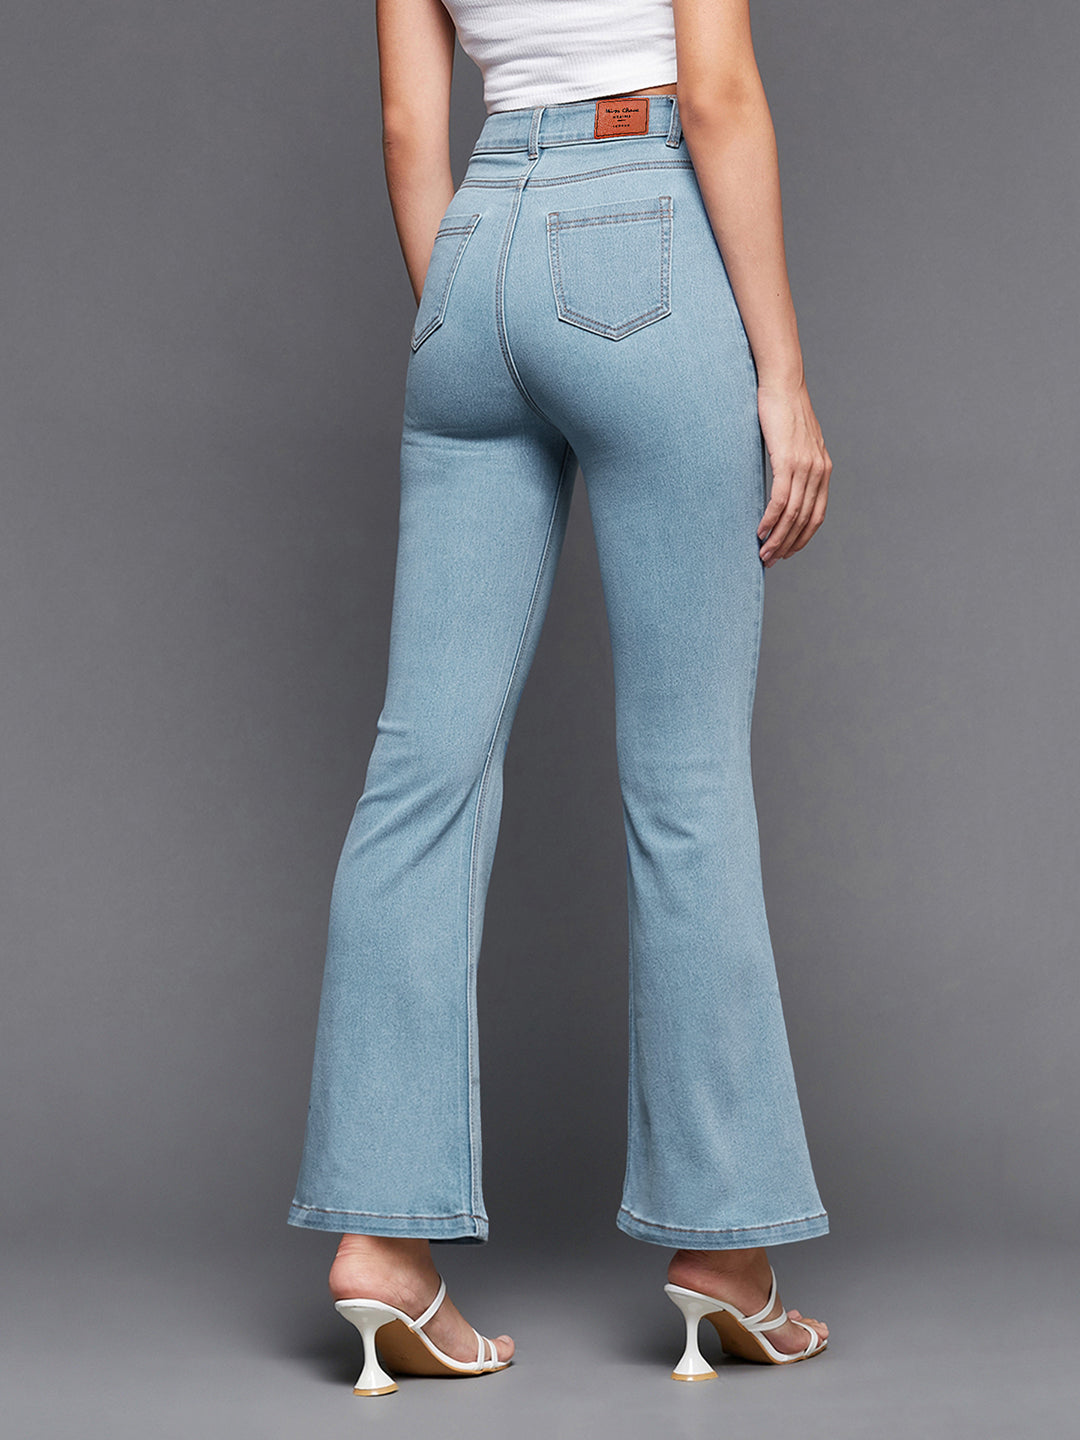 Women's Light Blue Bootcut High rise Stretchable Denim Jeans